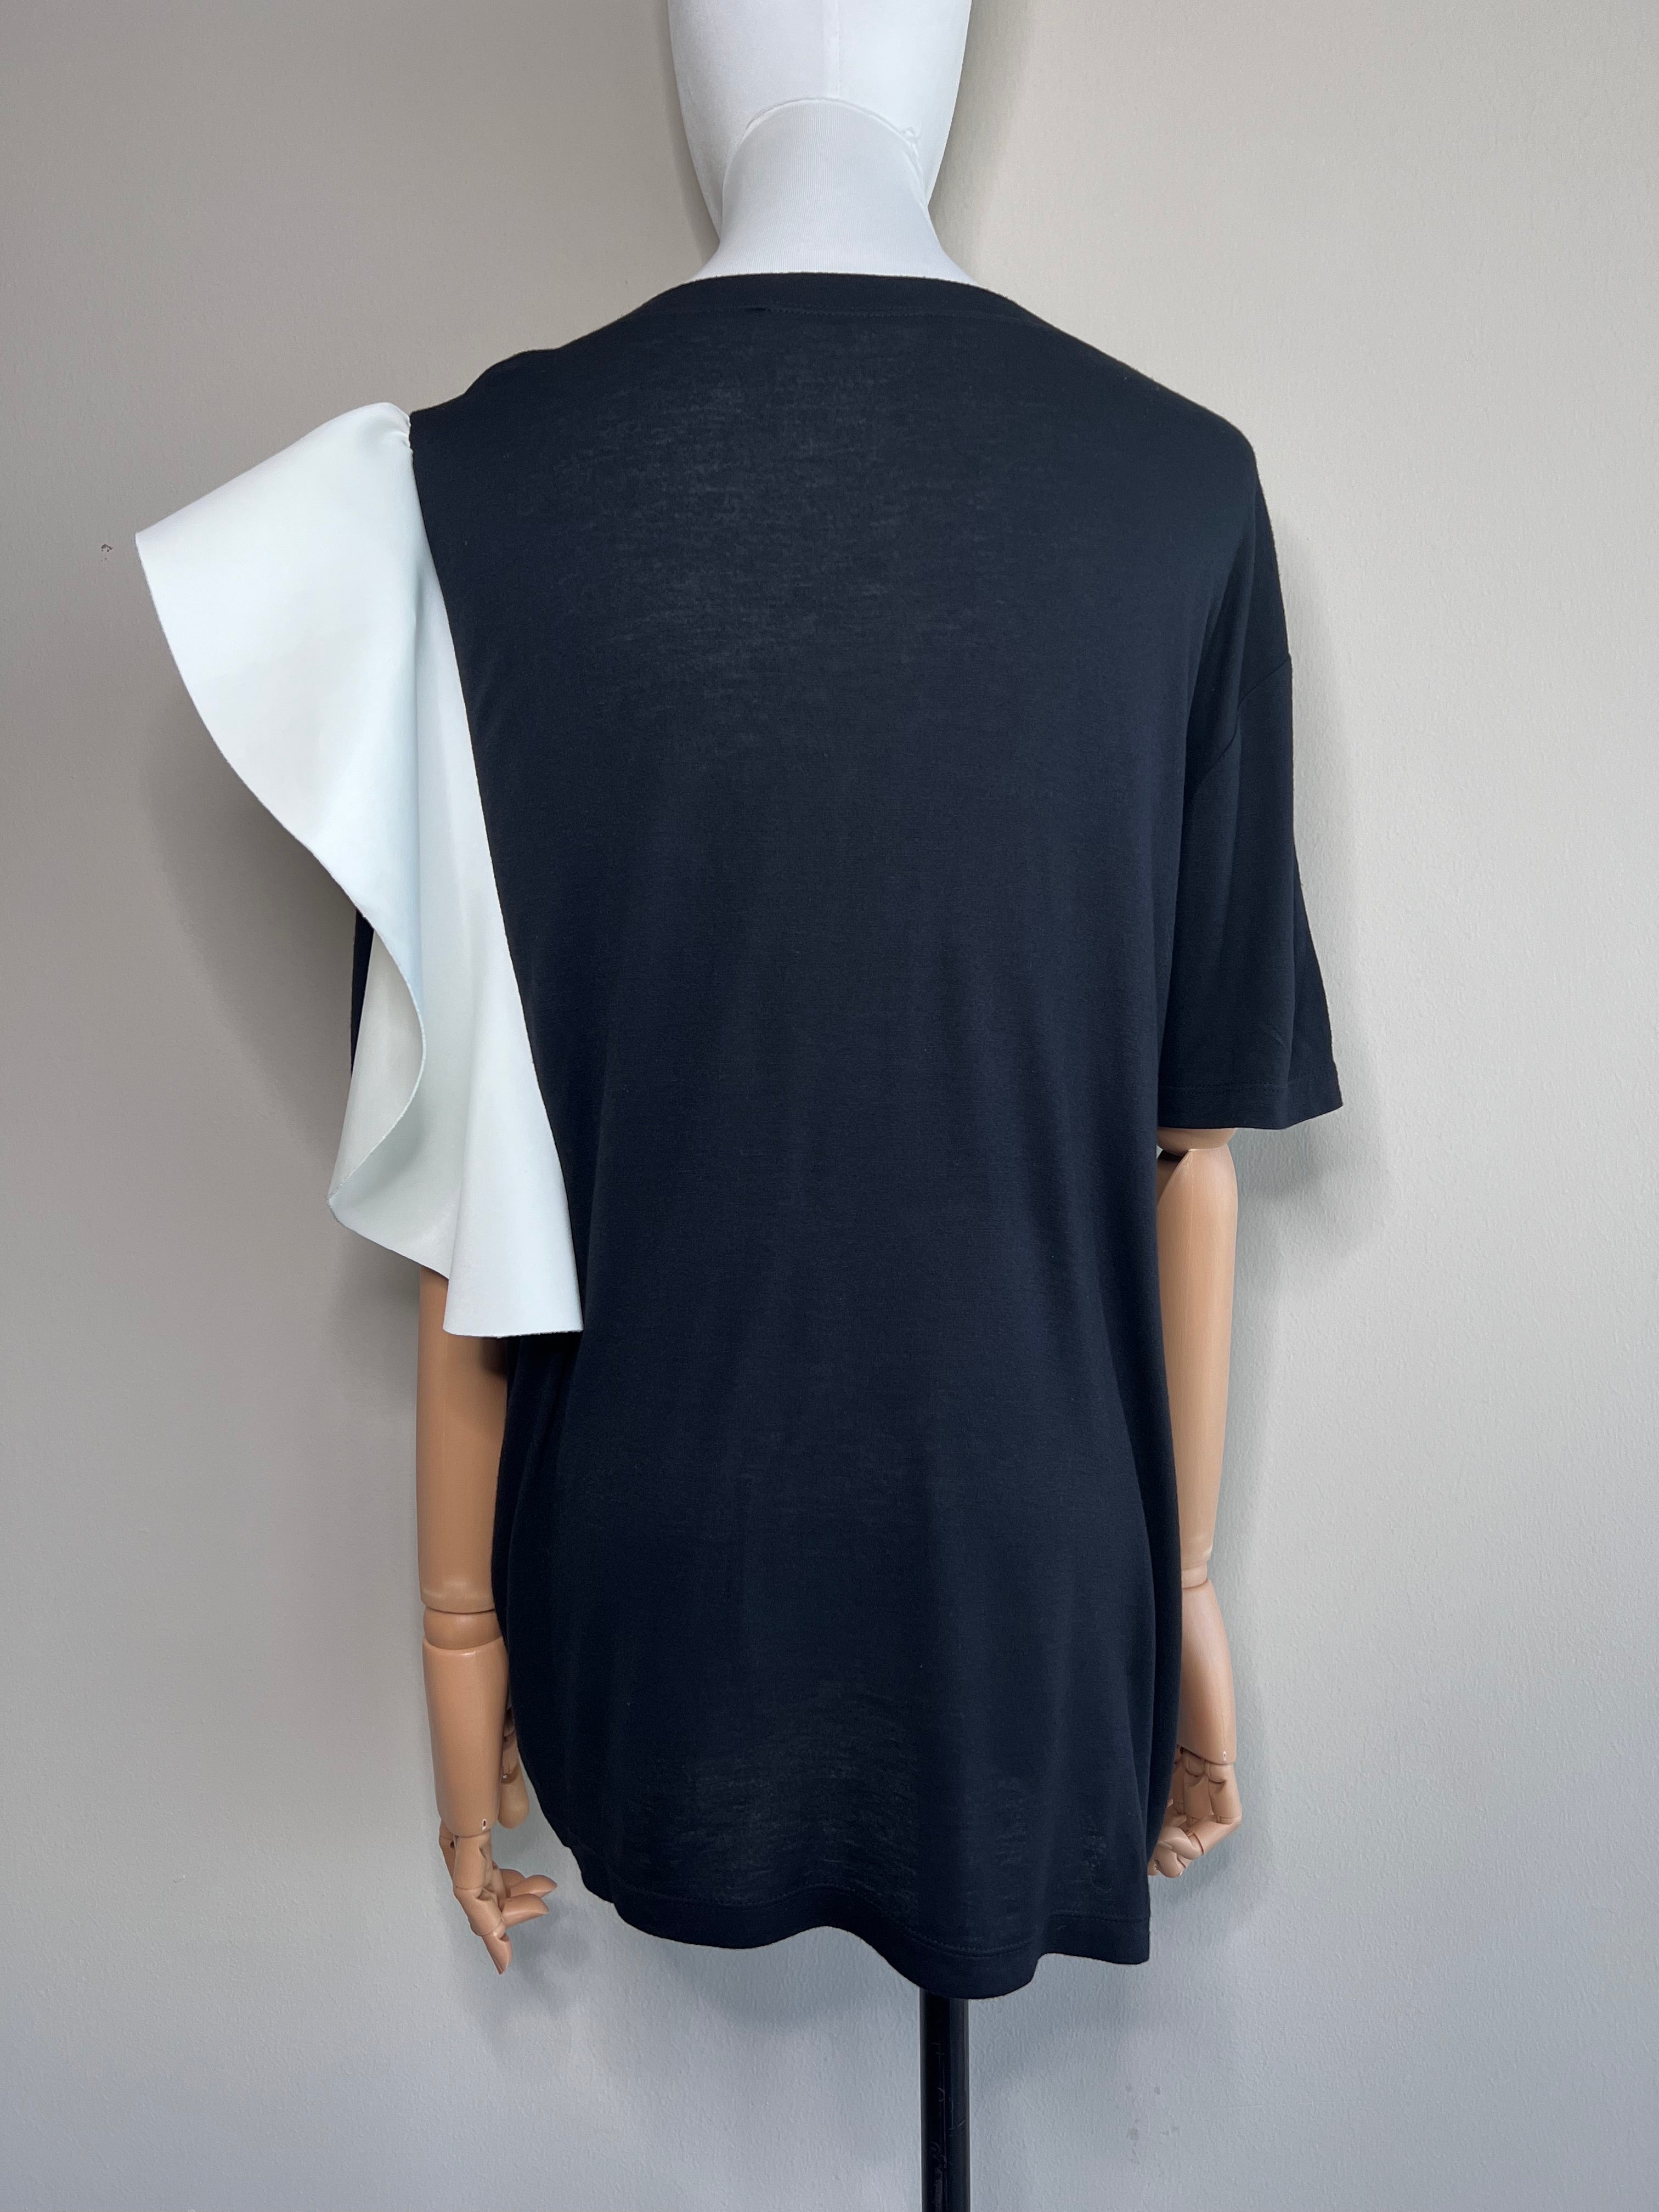 Plain black t-shirt with white ruffled design on shoulder - AMEN